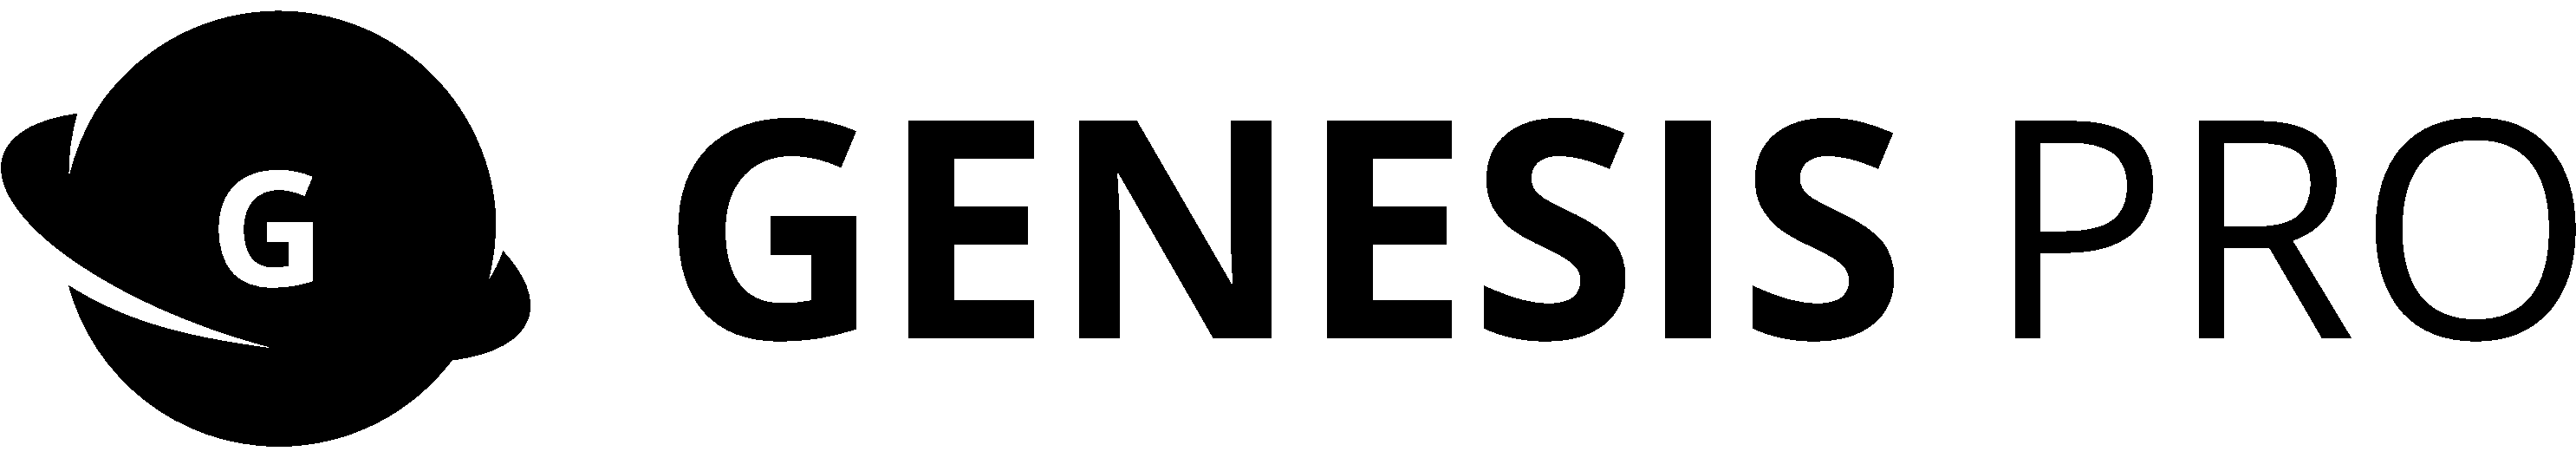 genesis logo black